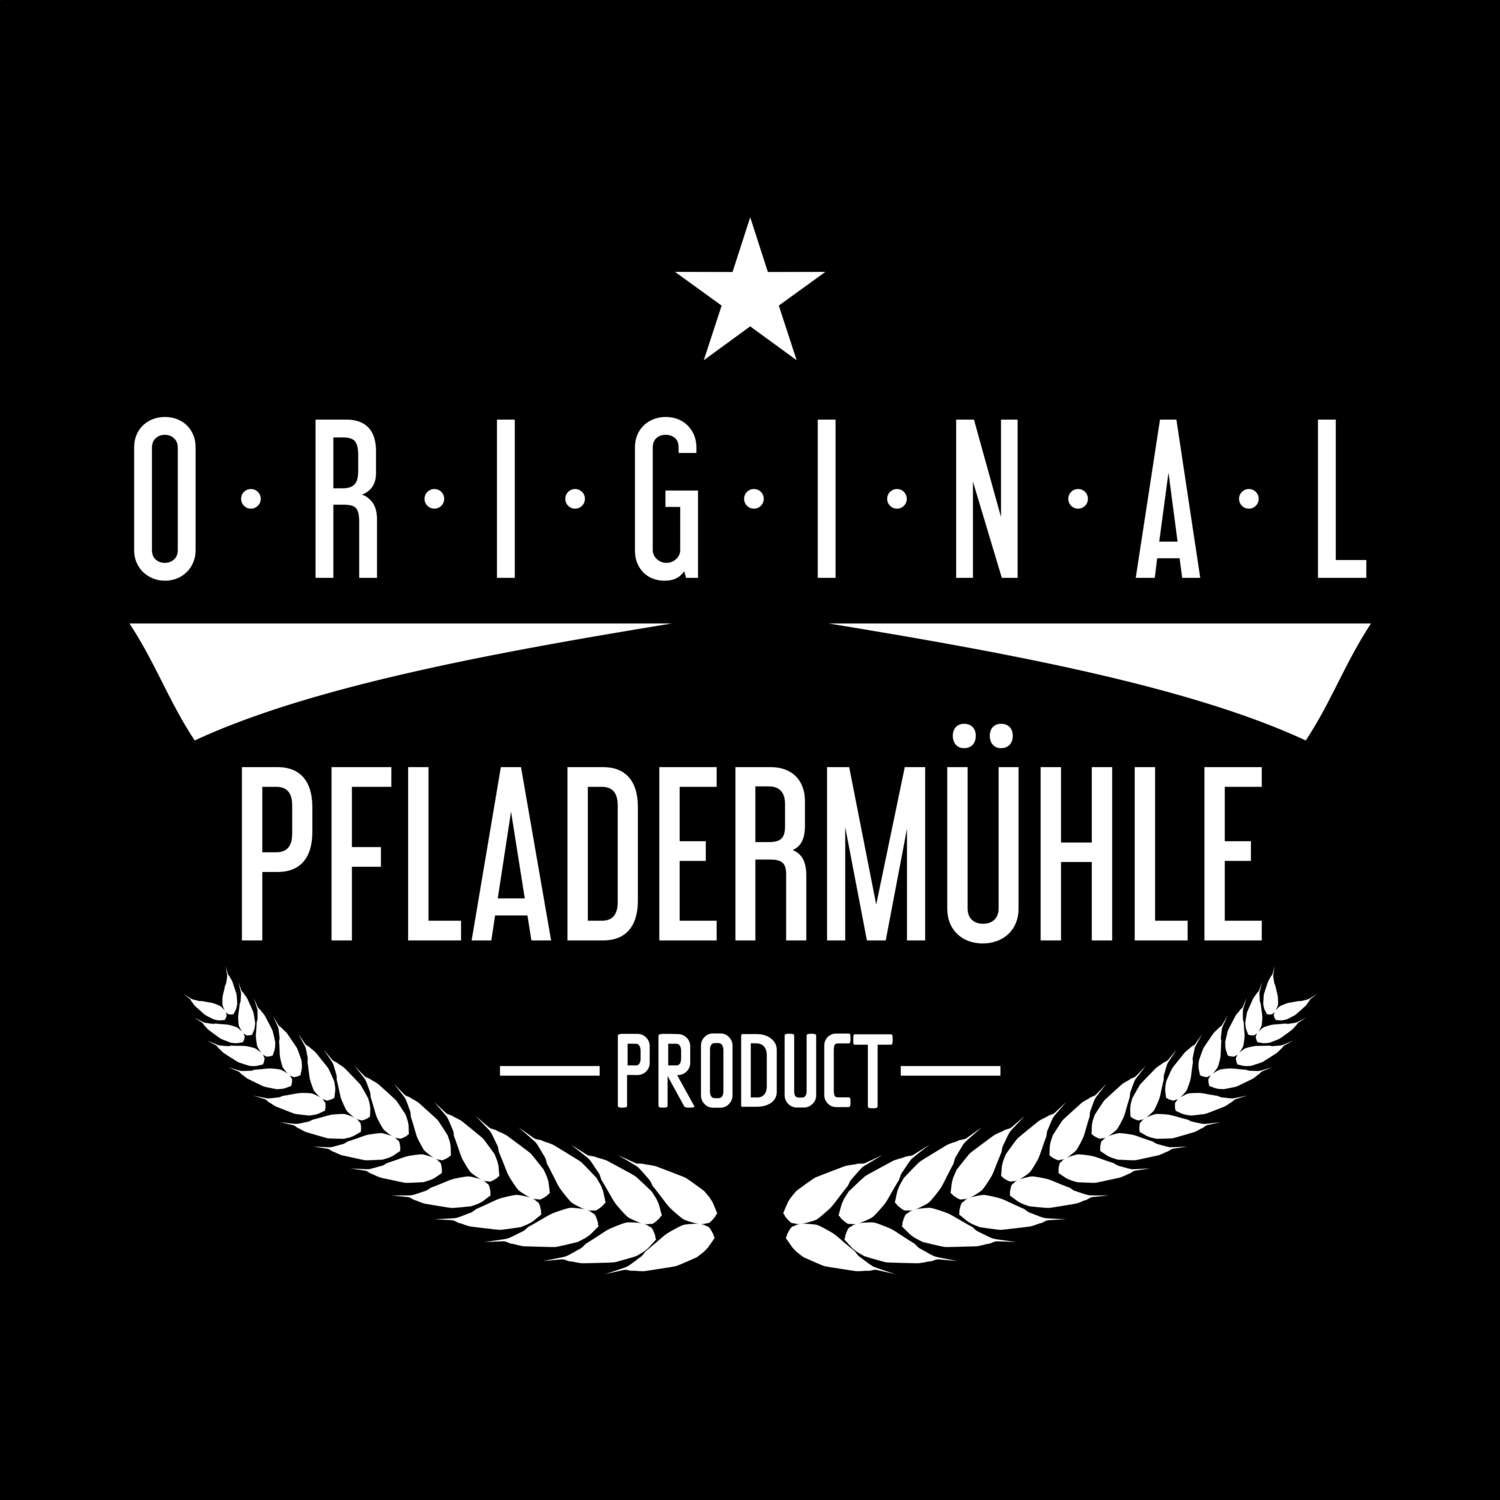 Pfladermühle T-Shirt »Original Product«